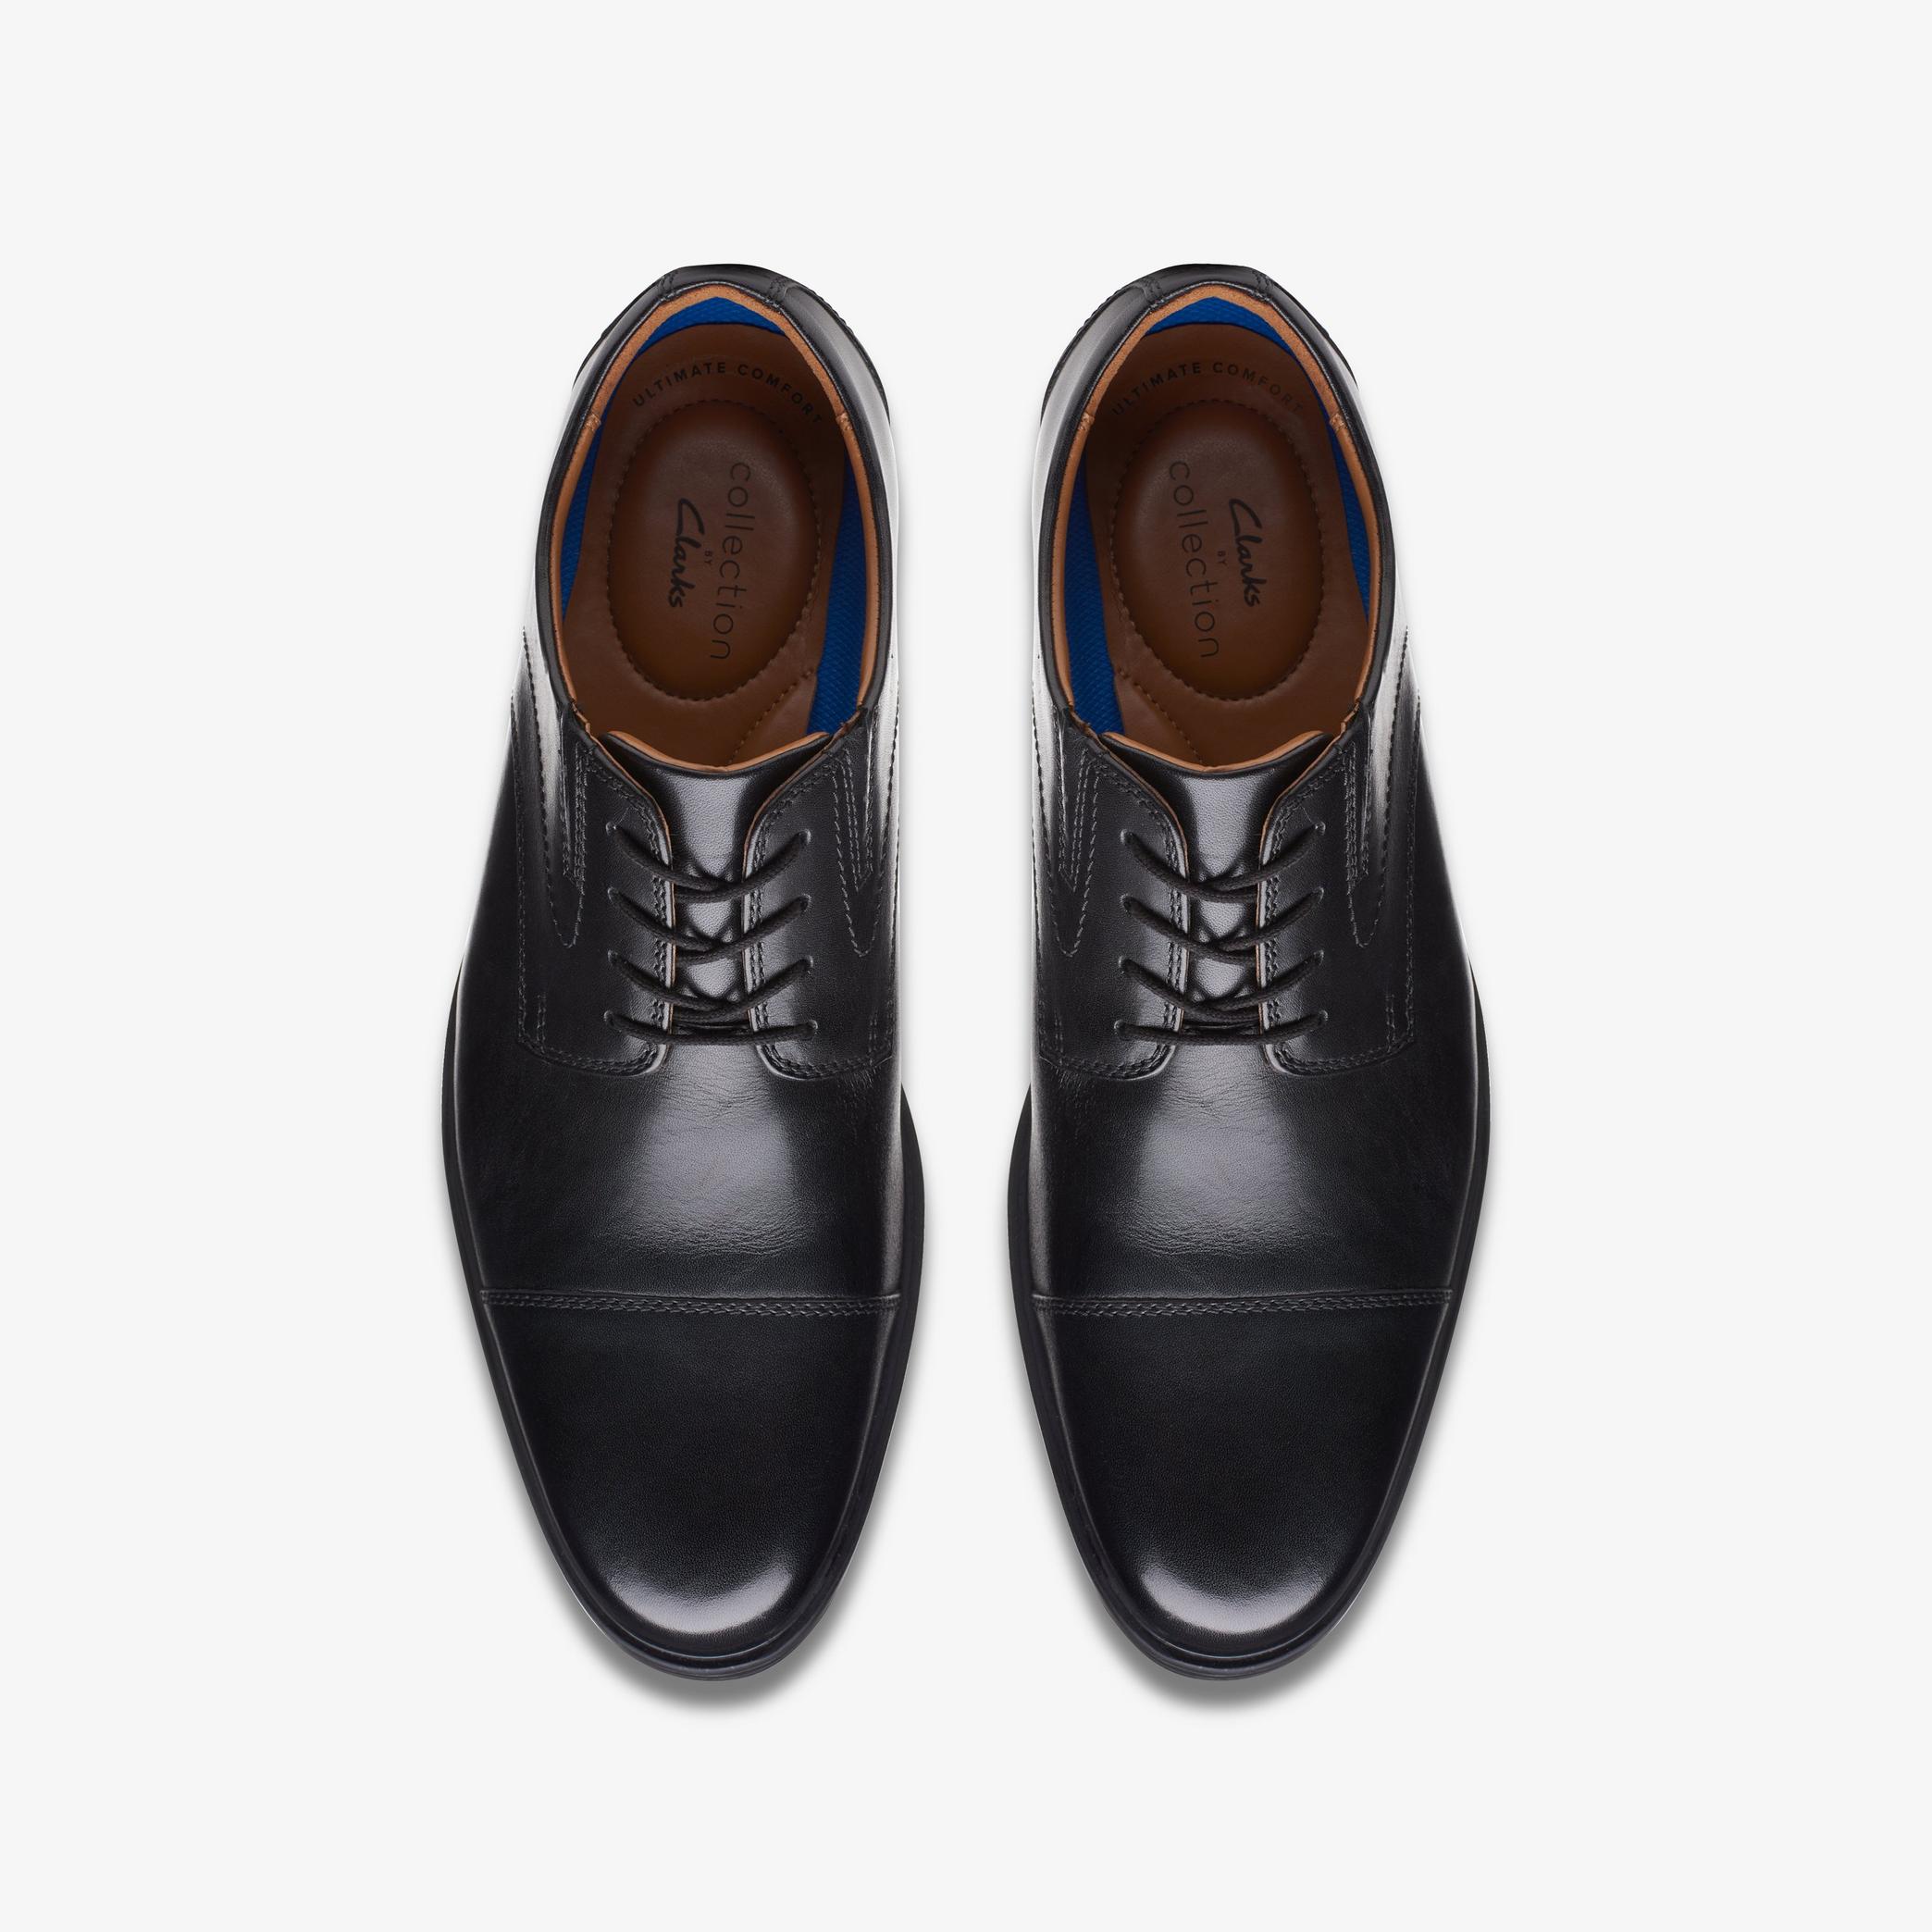 Chaussures Oxford en cuir noir Whiddon Cap, vue 6 de 6